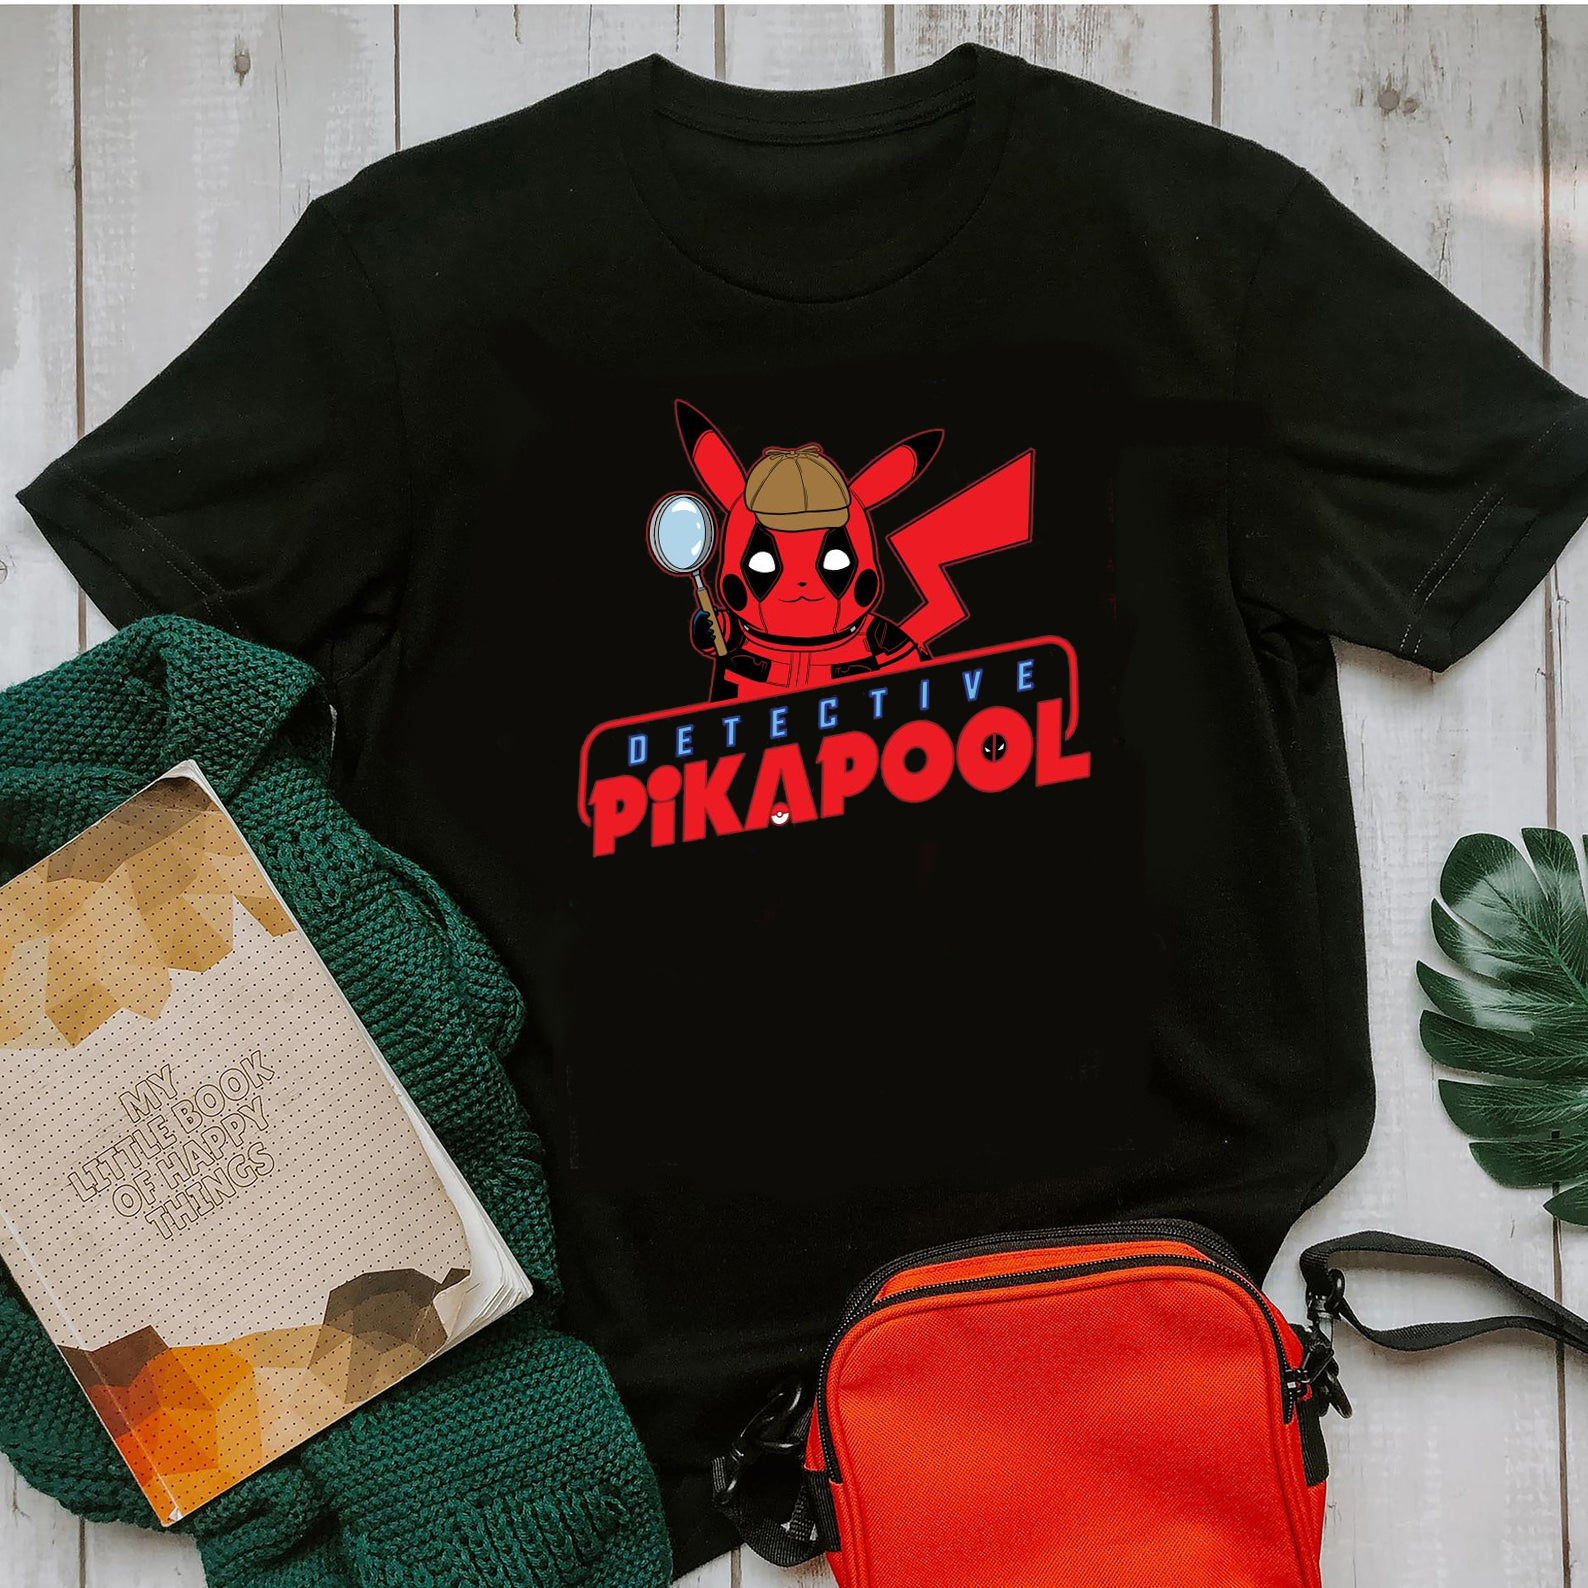 Detective Pikapool Shirt, Deadpool Pikachu Shirt, , Deadpool Shirt, Pikachu Shirt